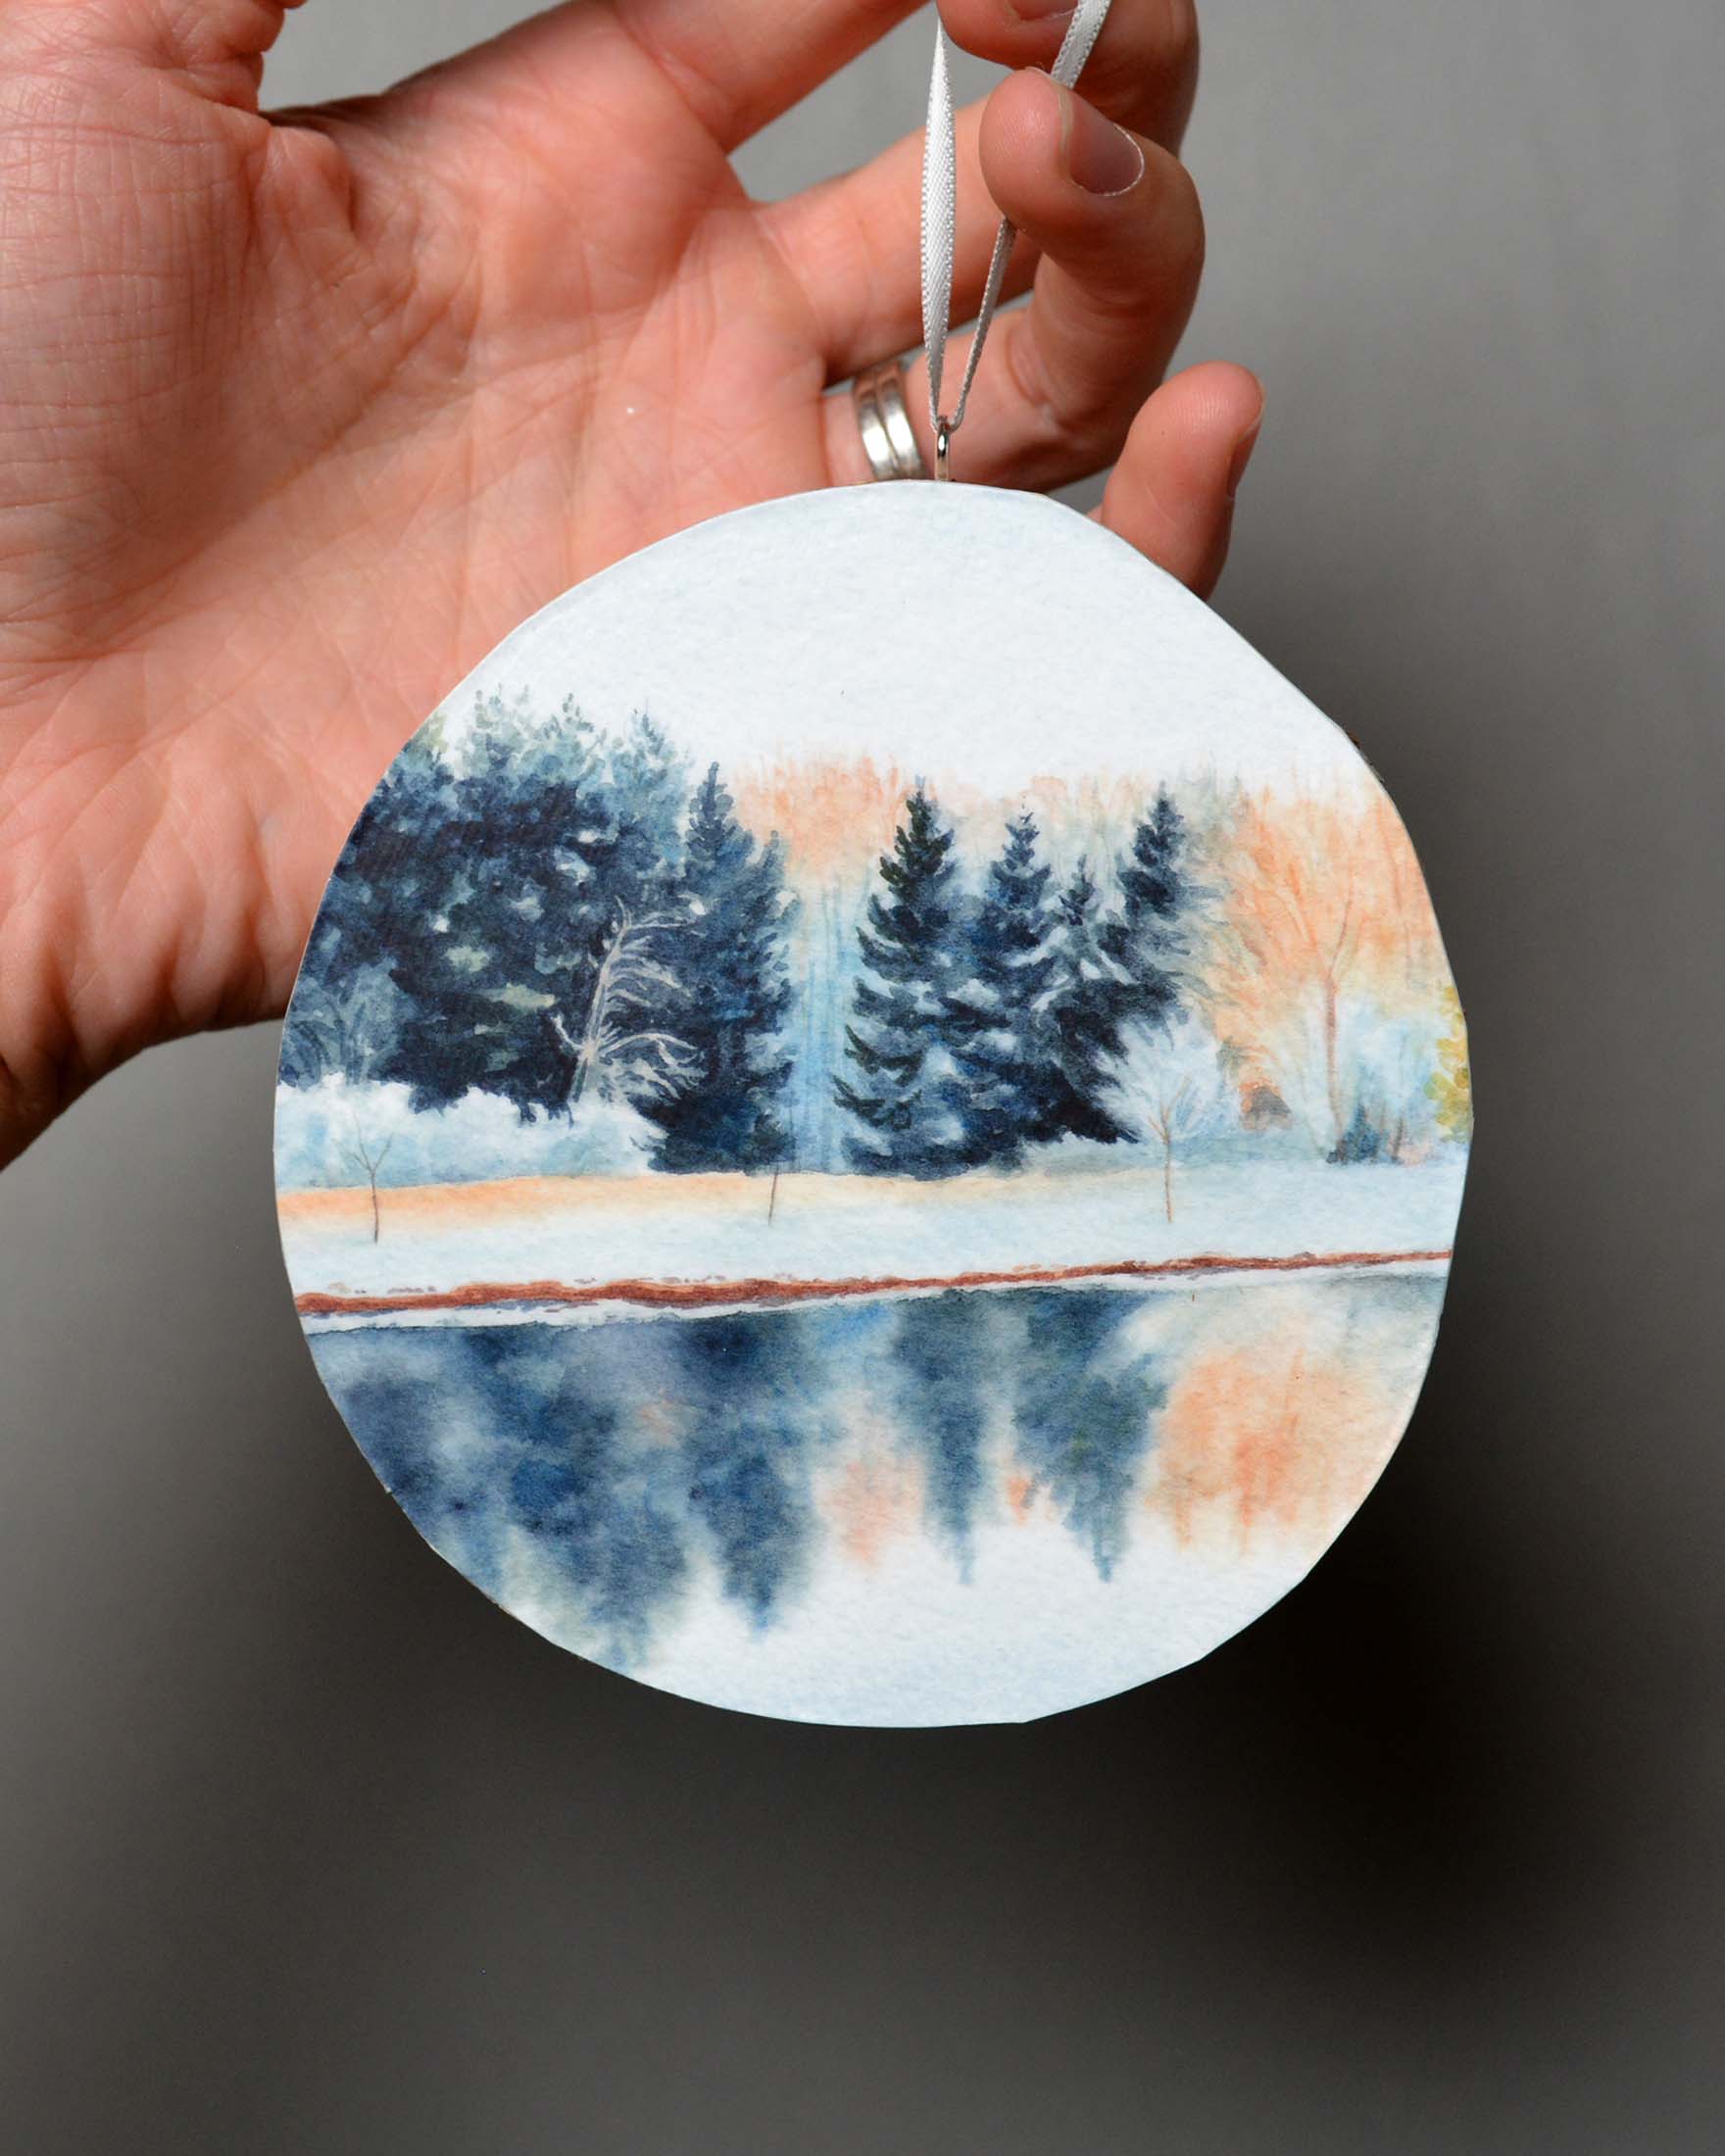 Winter Pond - Ornament - Kim Everhard Art